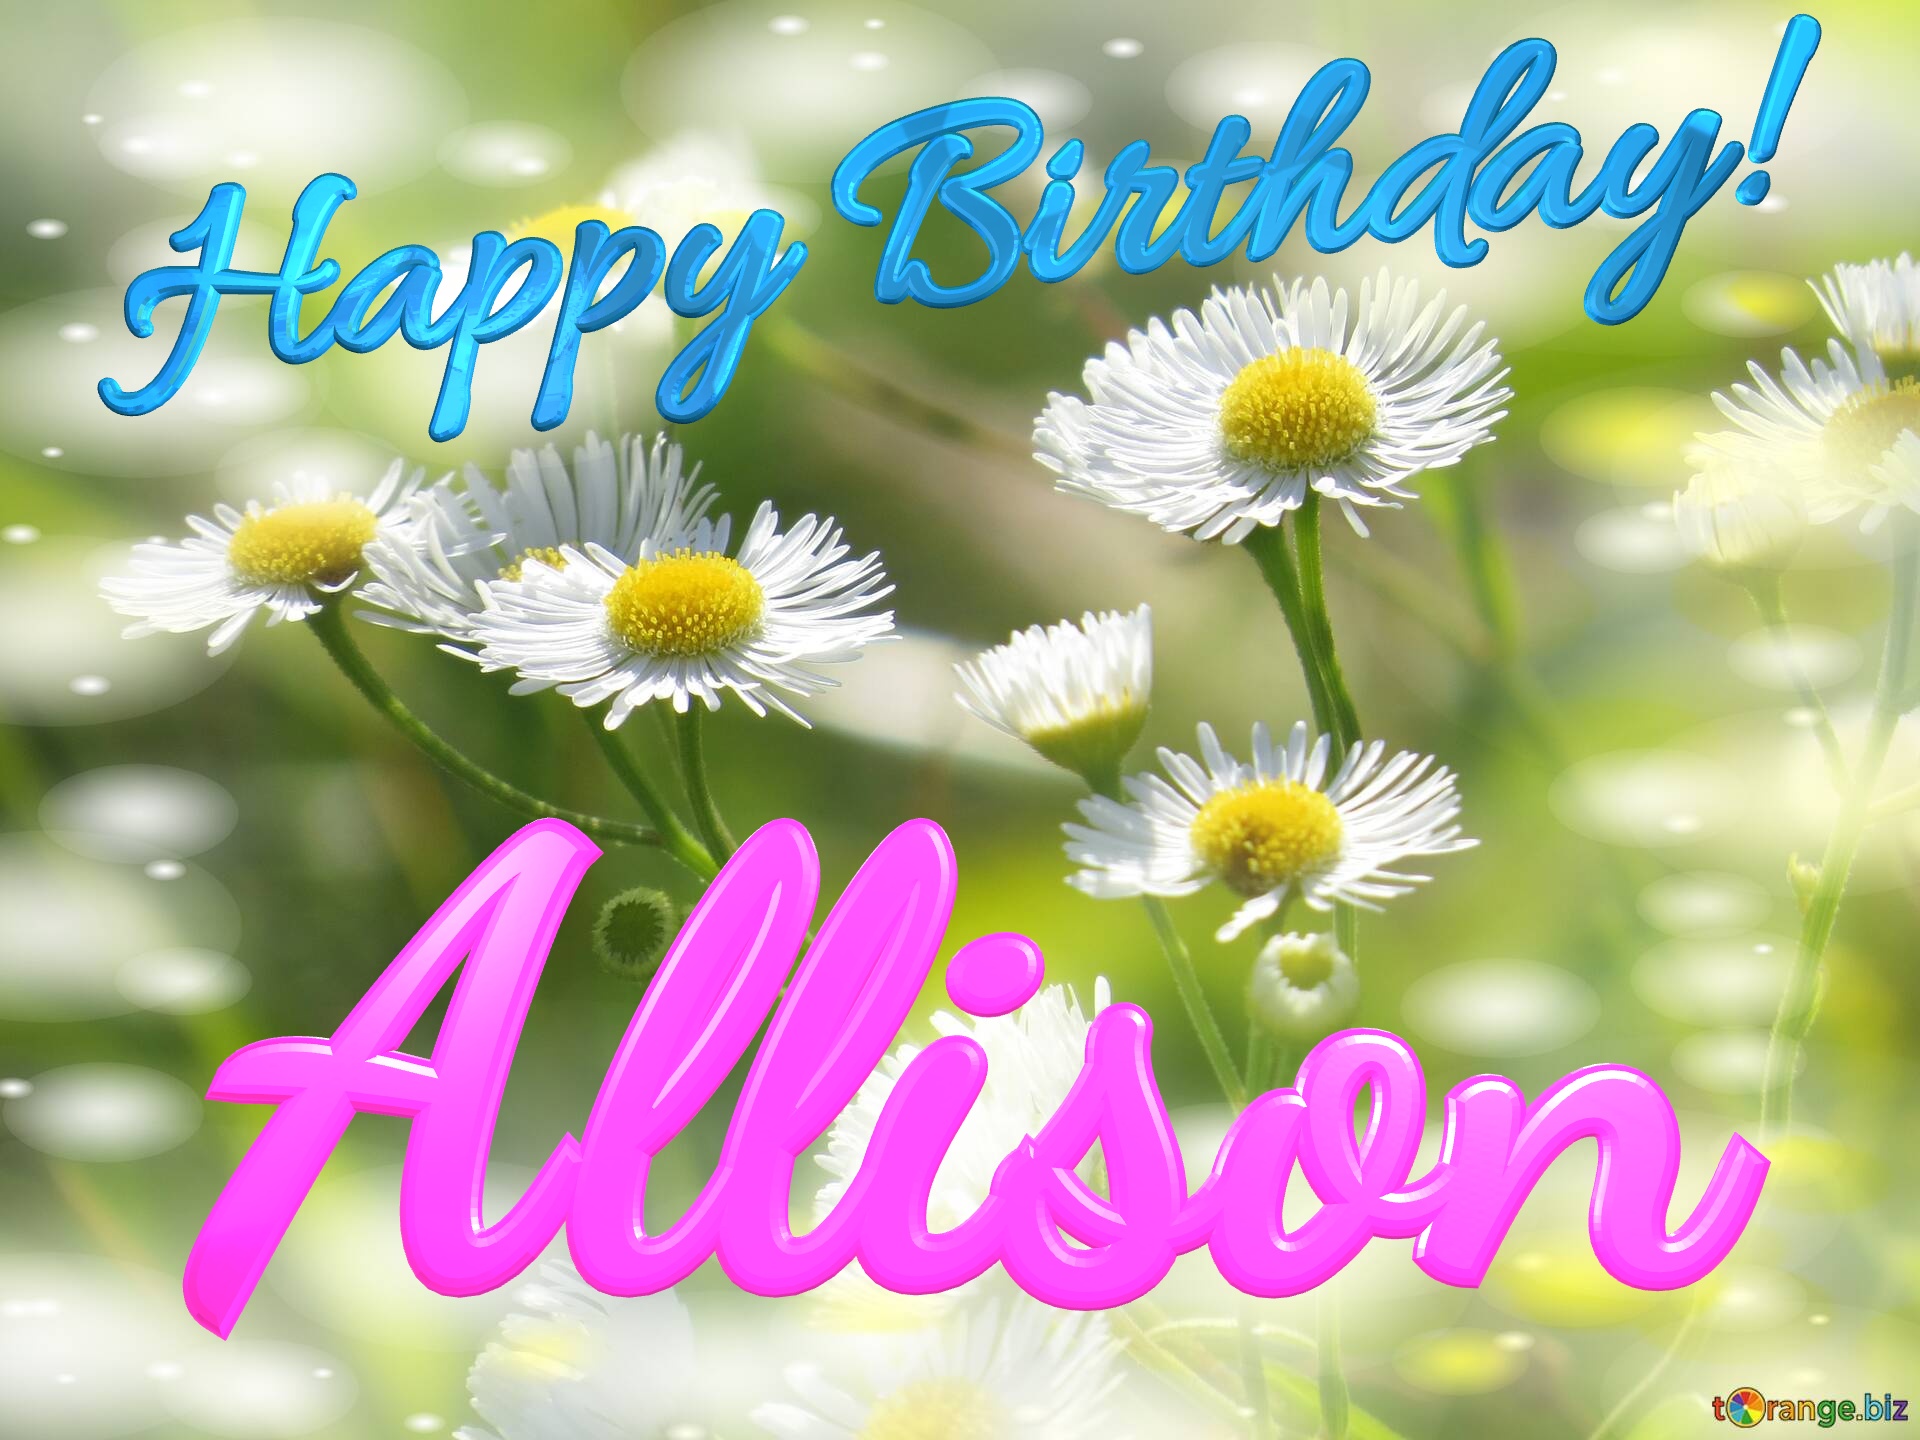 Allison Happy Birthday! Daisies bokeh background №0